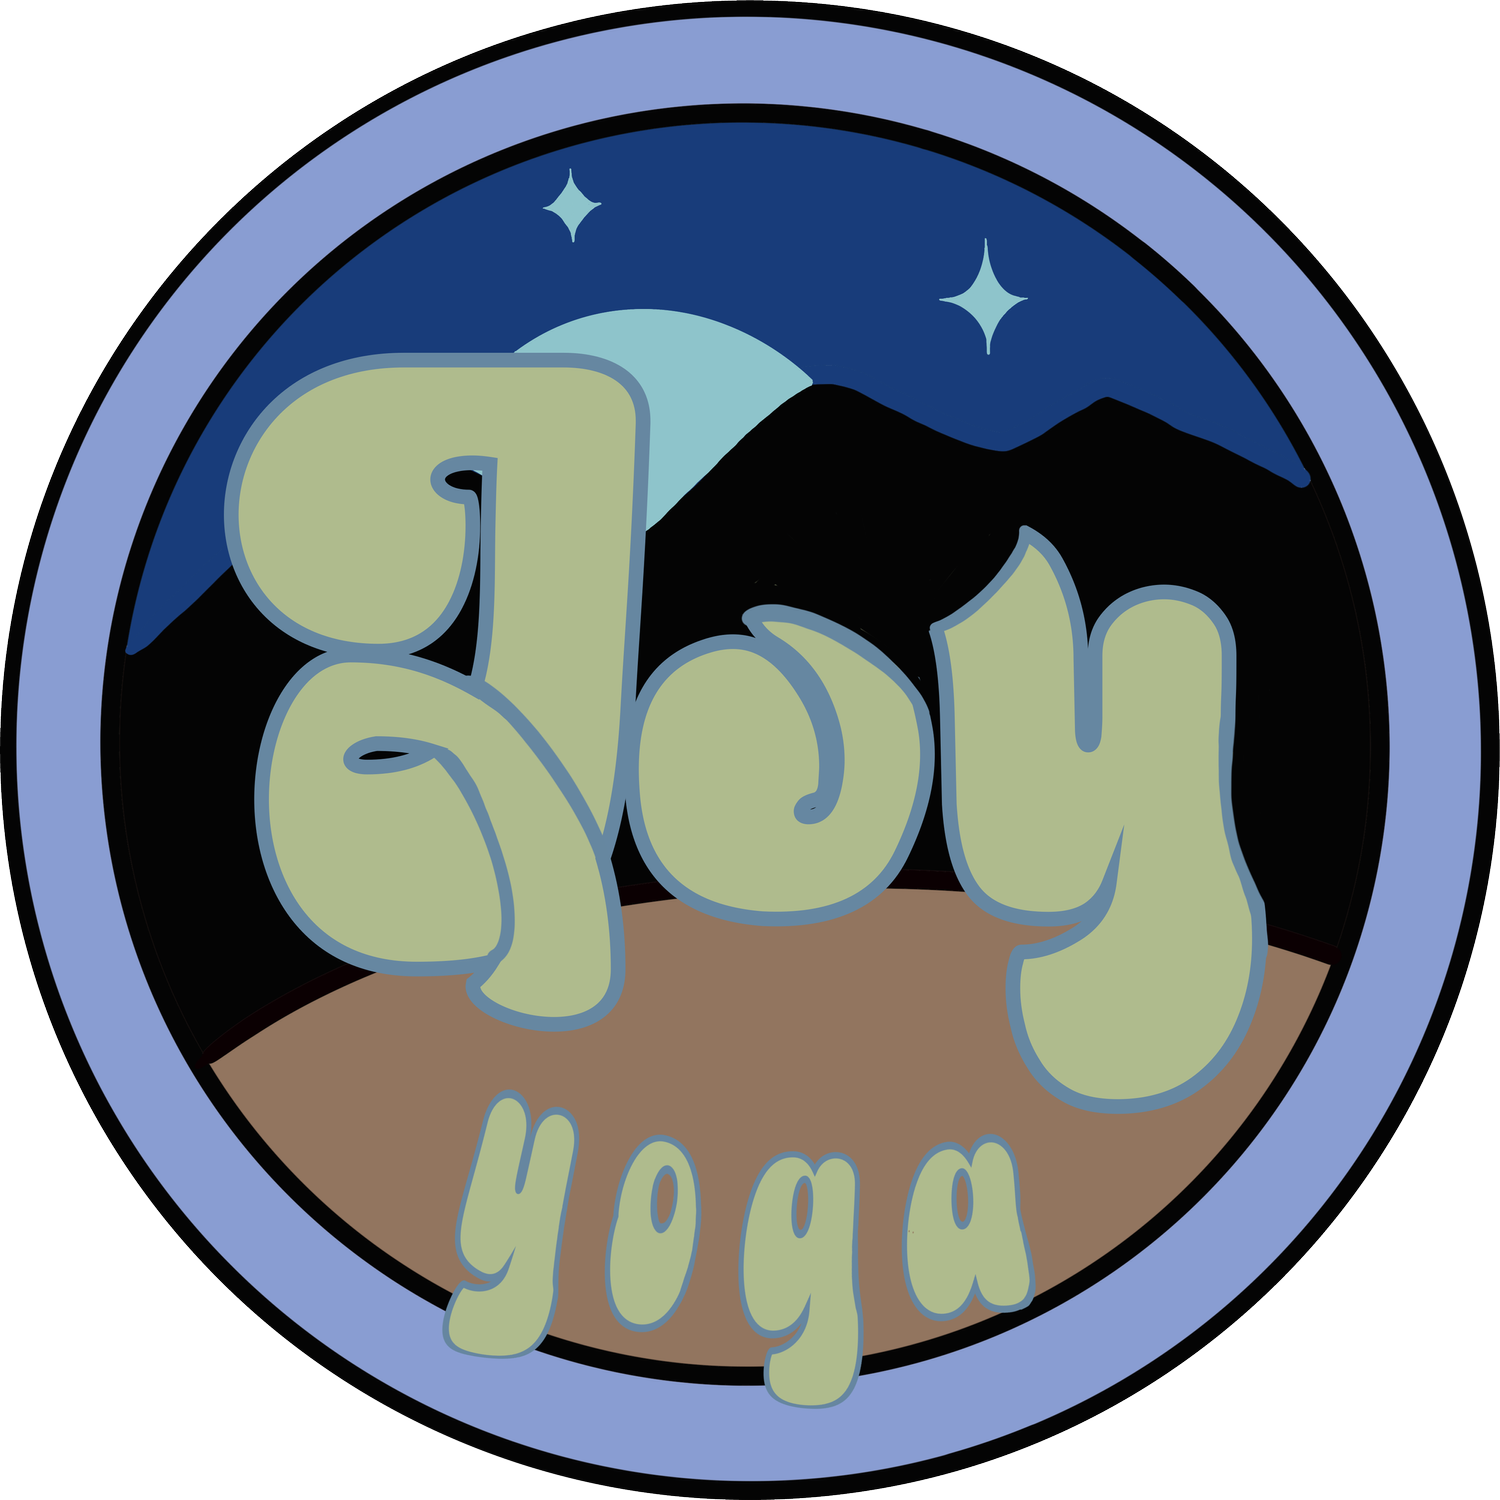 Joy Yoga Taos New Mexico